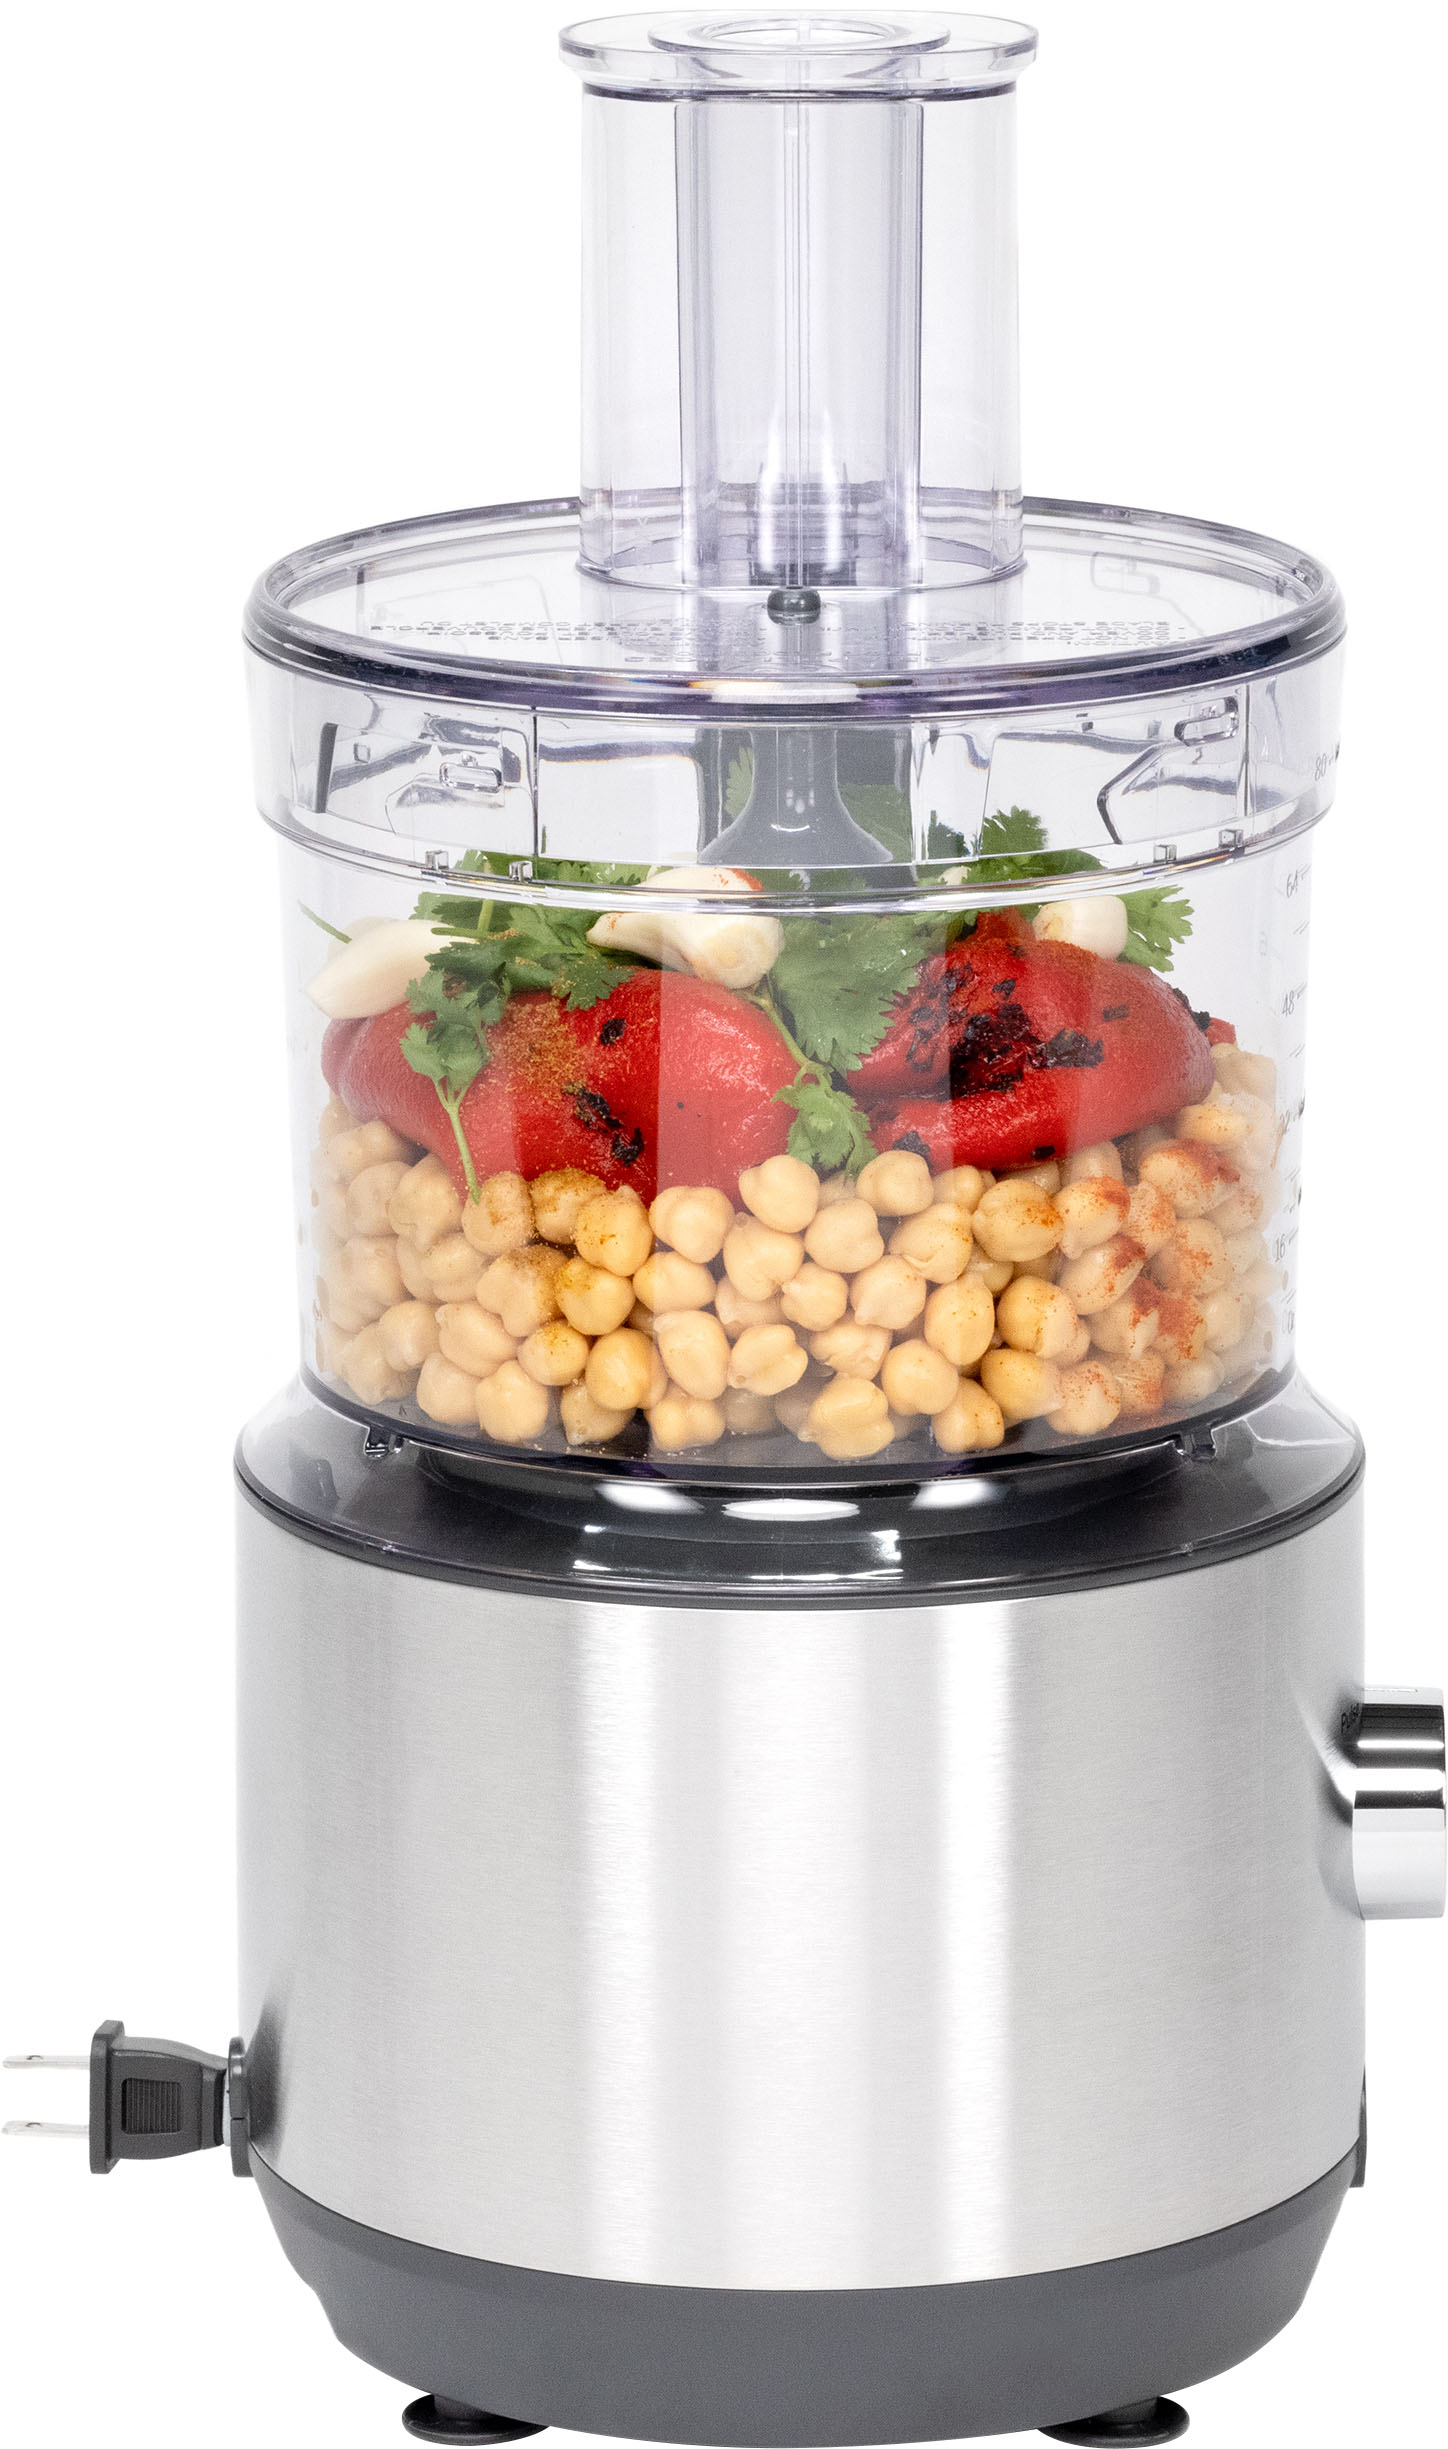 GE 12-Cup Food Processor Review - Vegan Globe Trotter.com